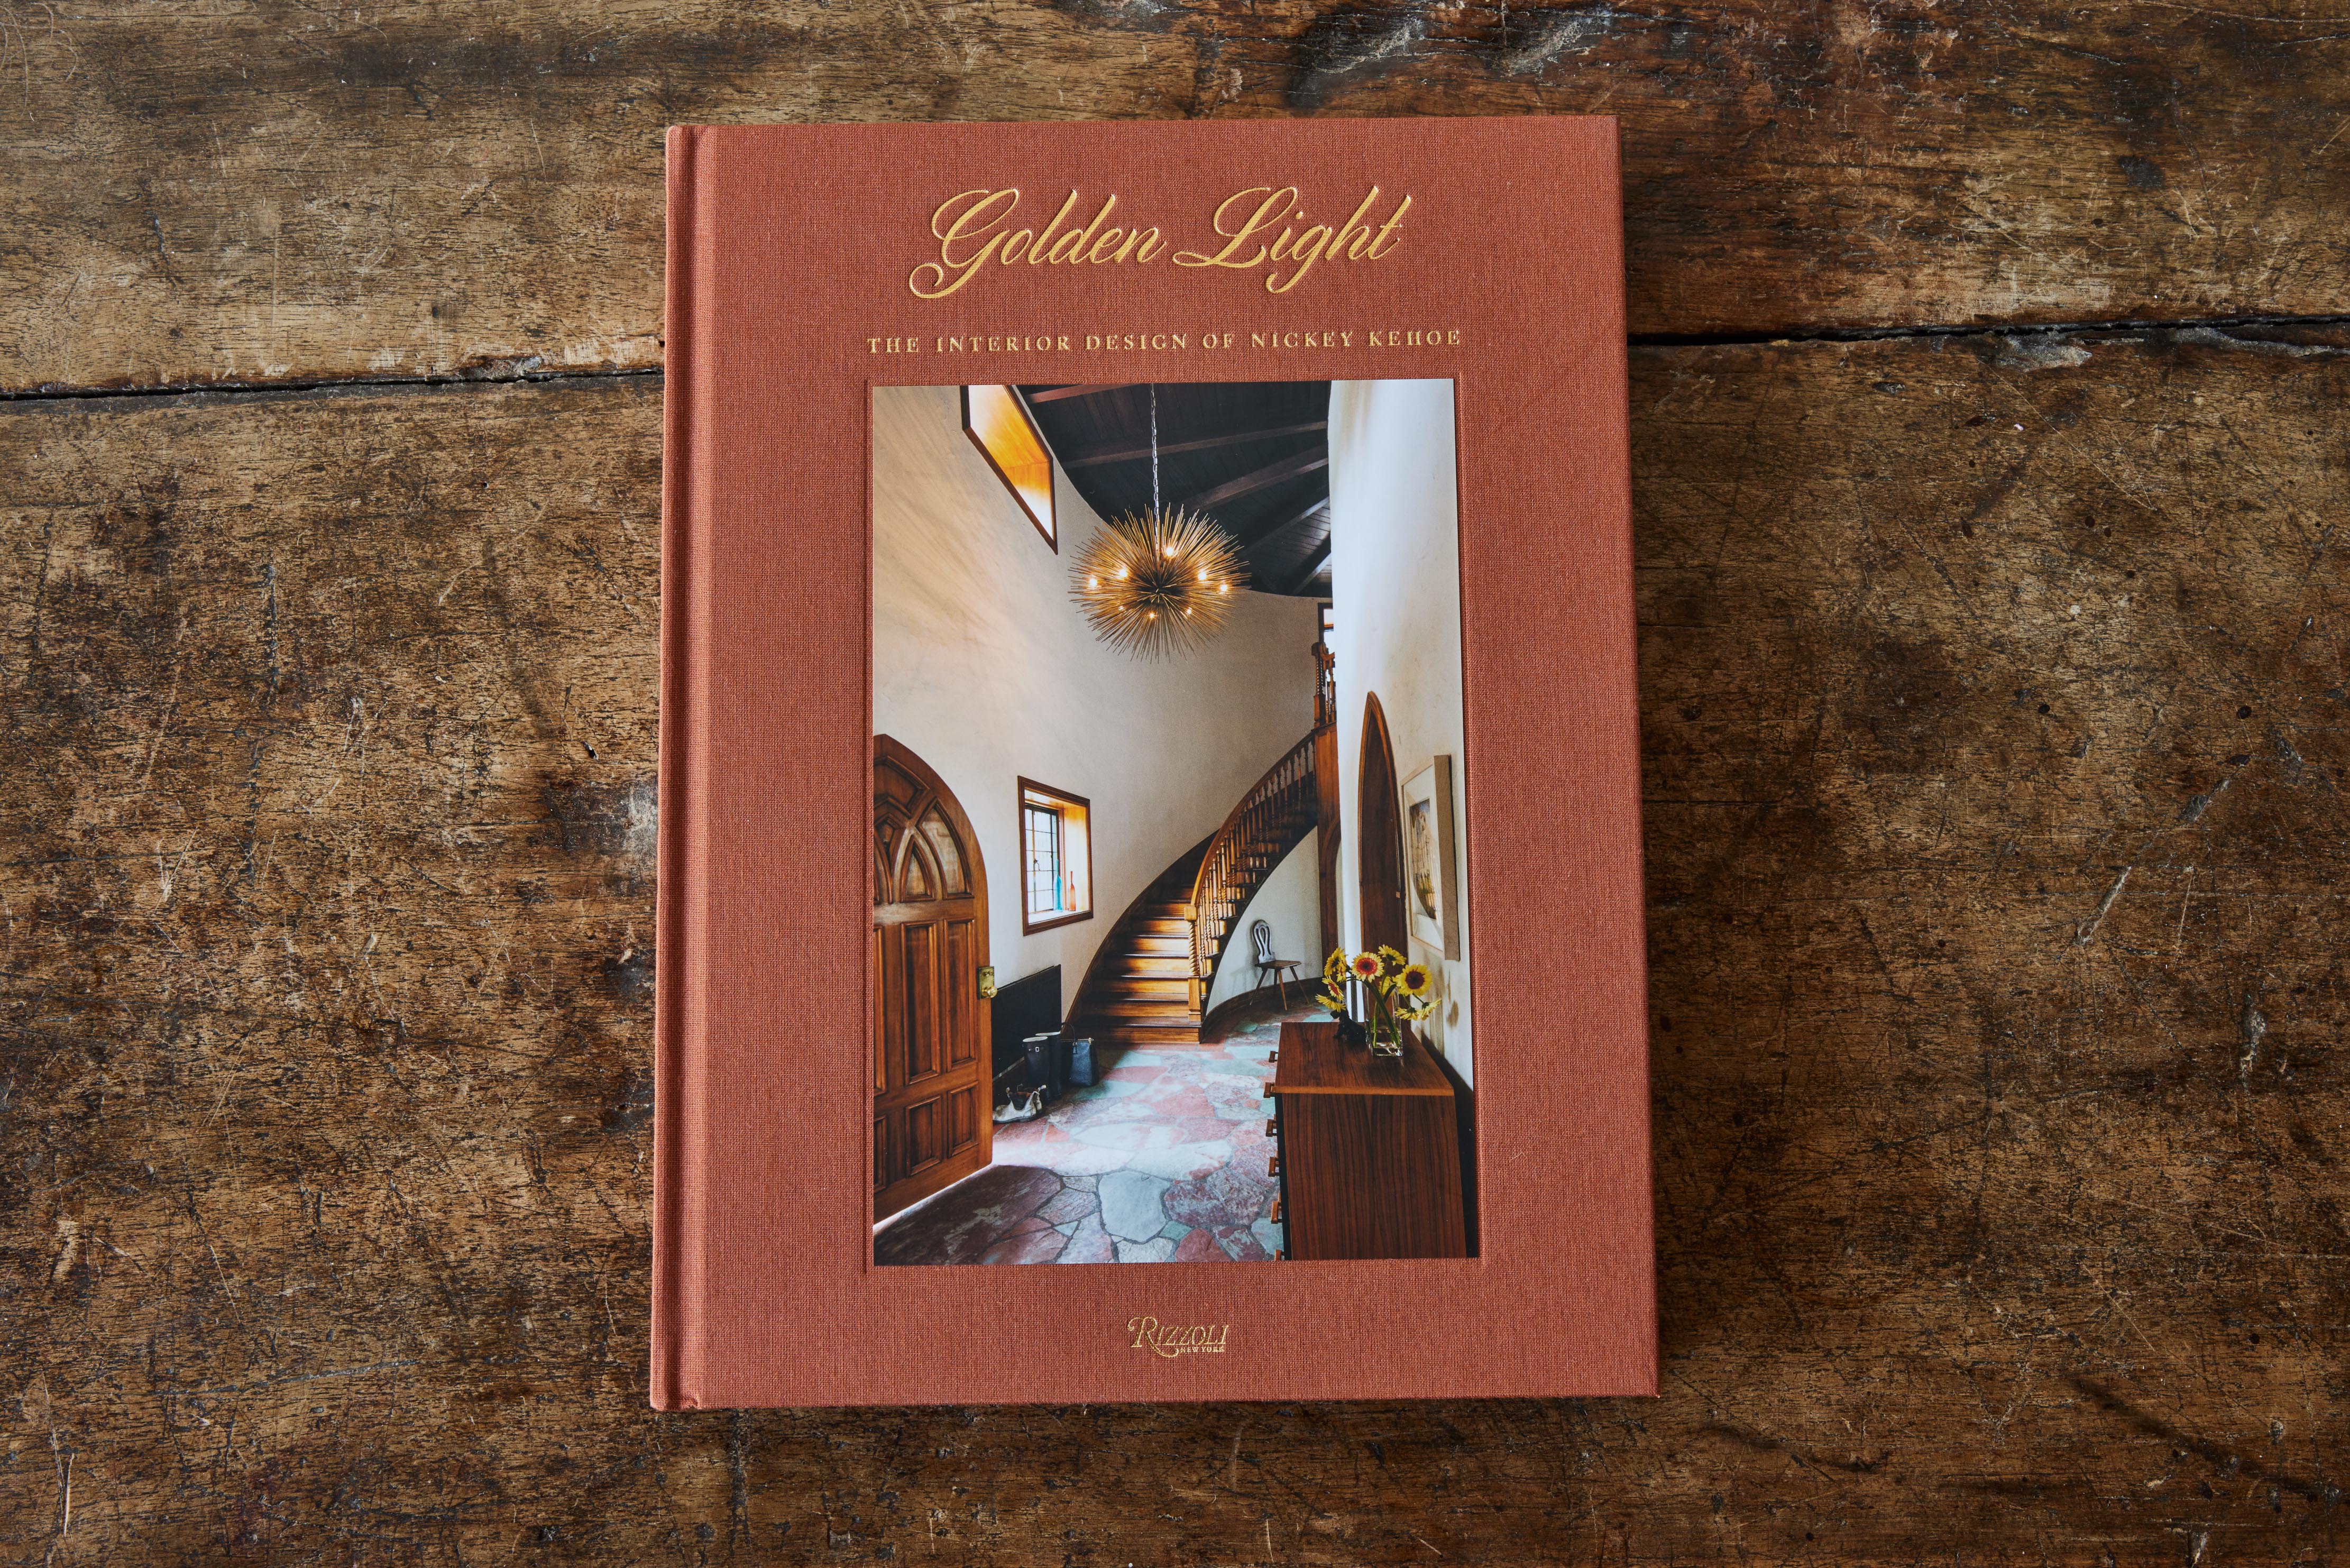 Golden Light, The Interior Design of Nickey Kehoe